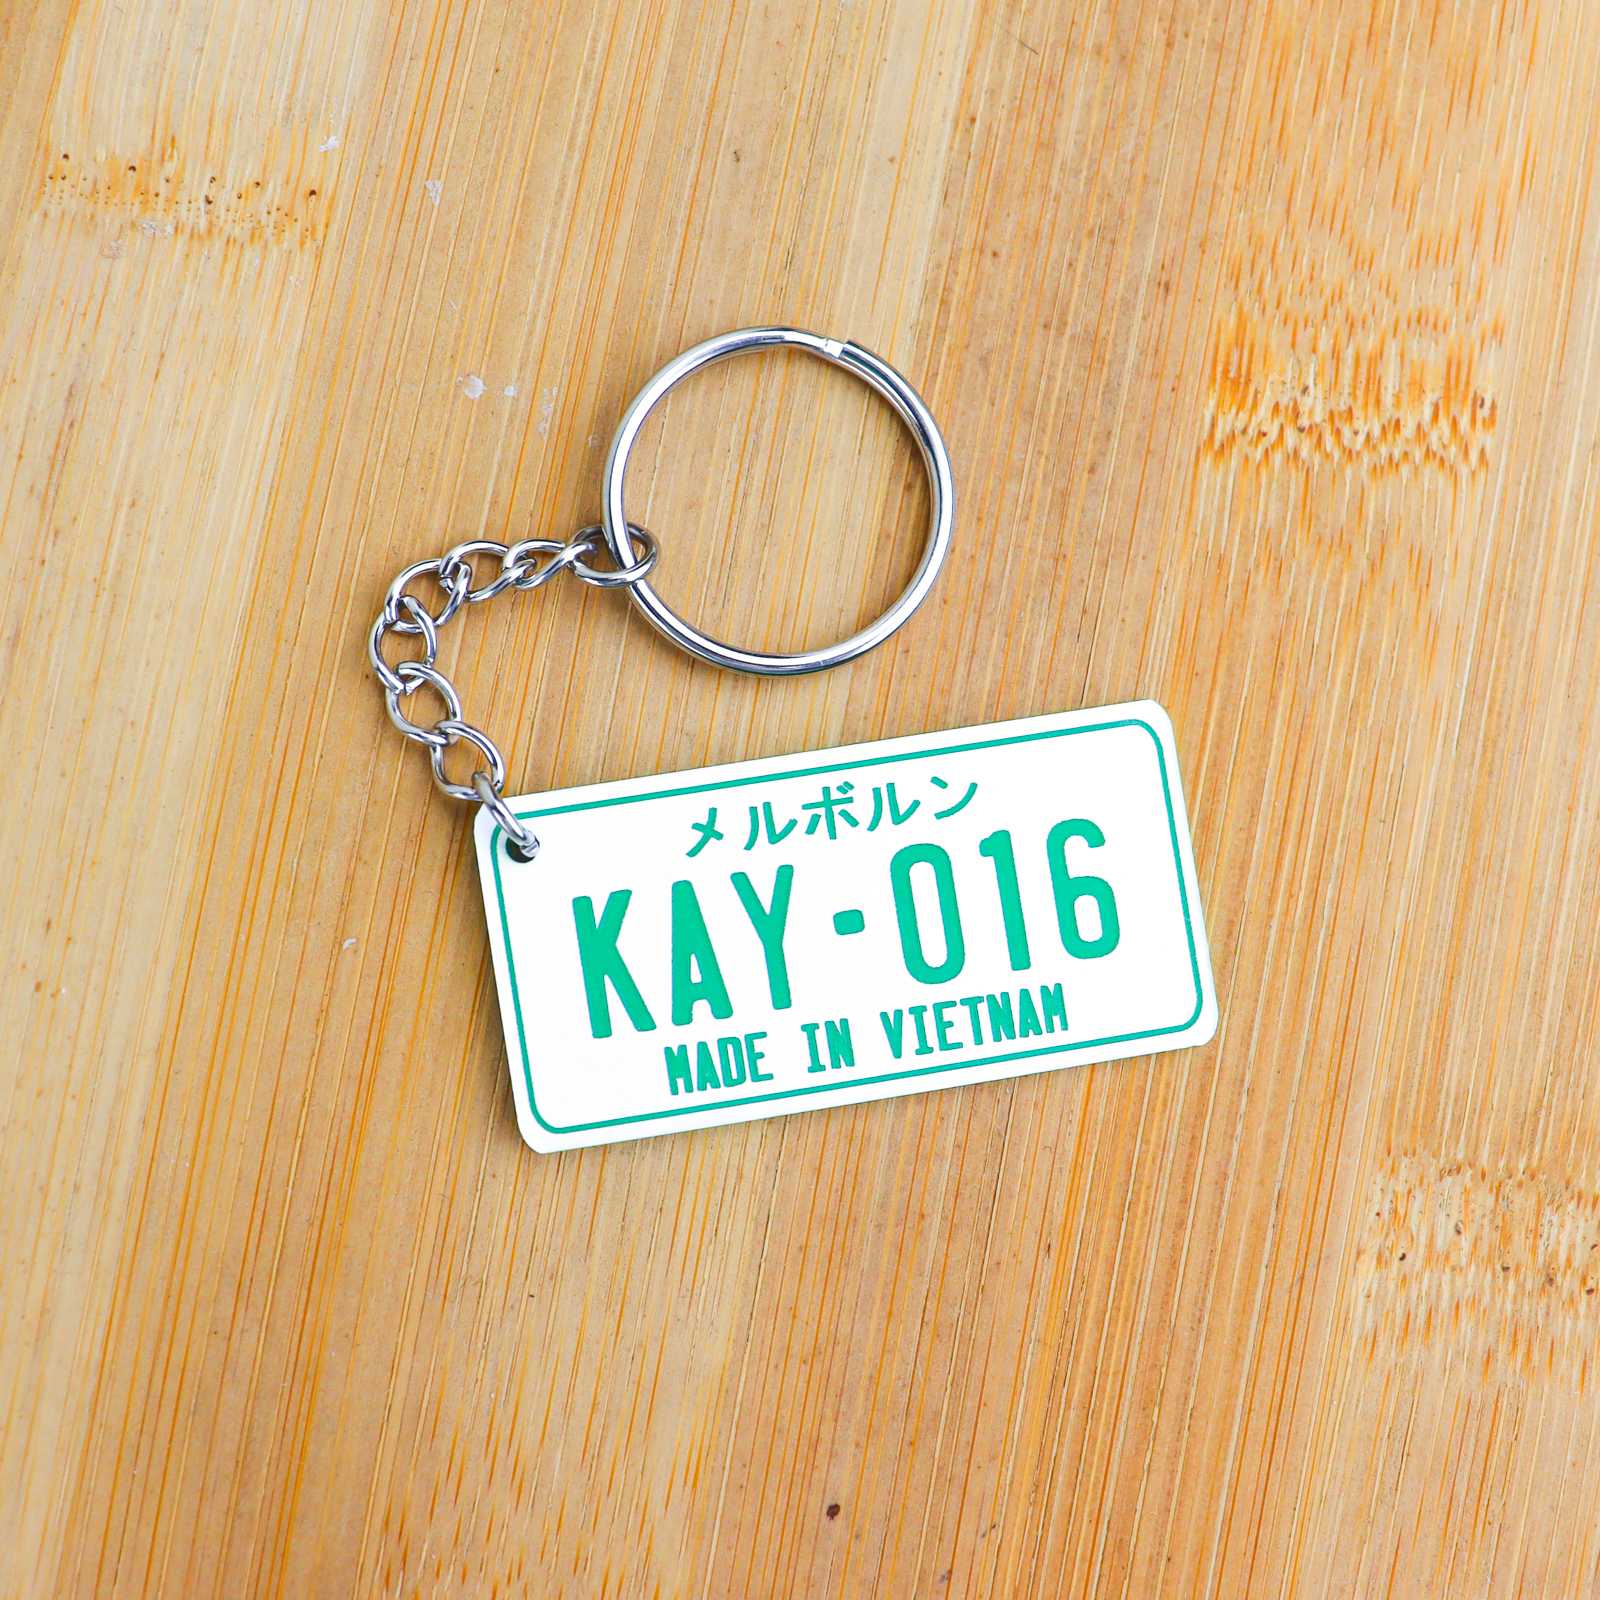 Jdm plateit© licence plate keychain